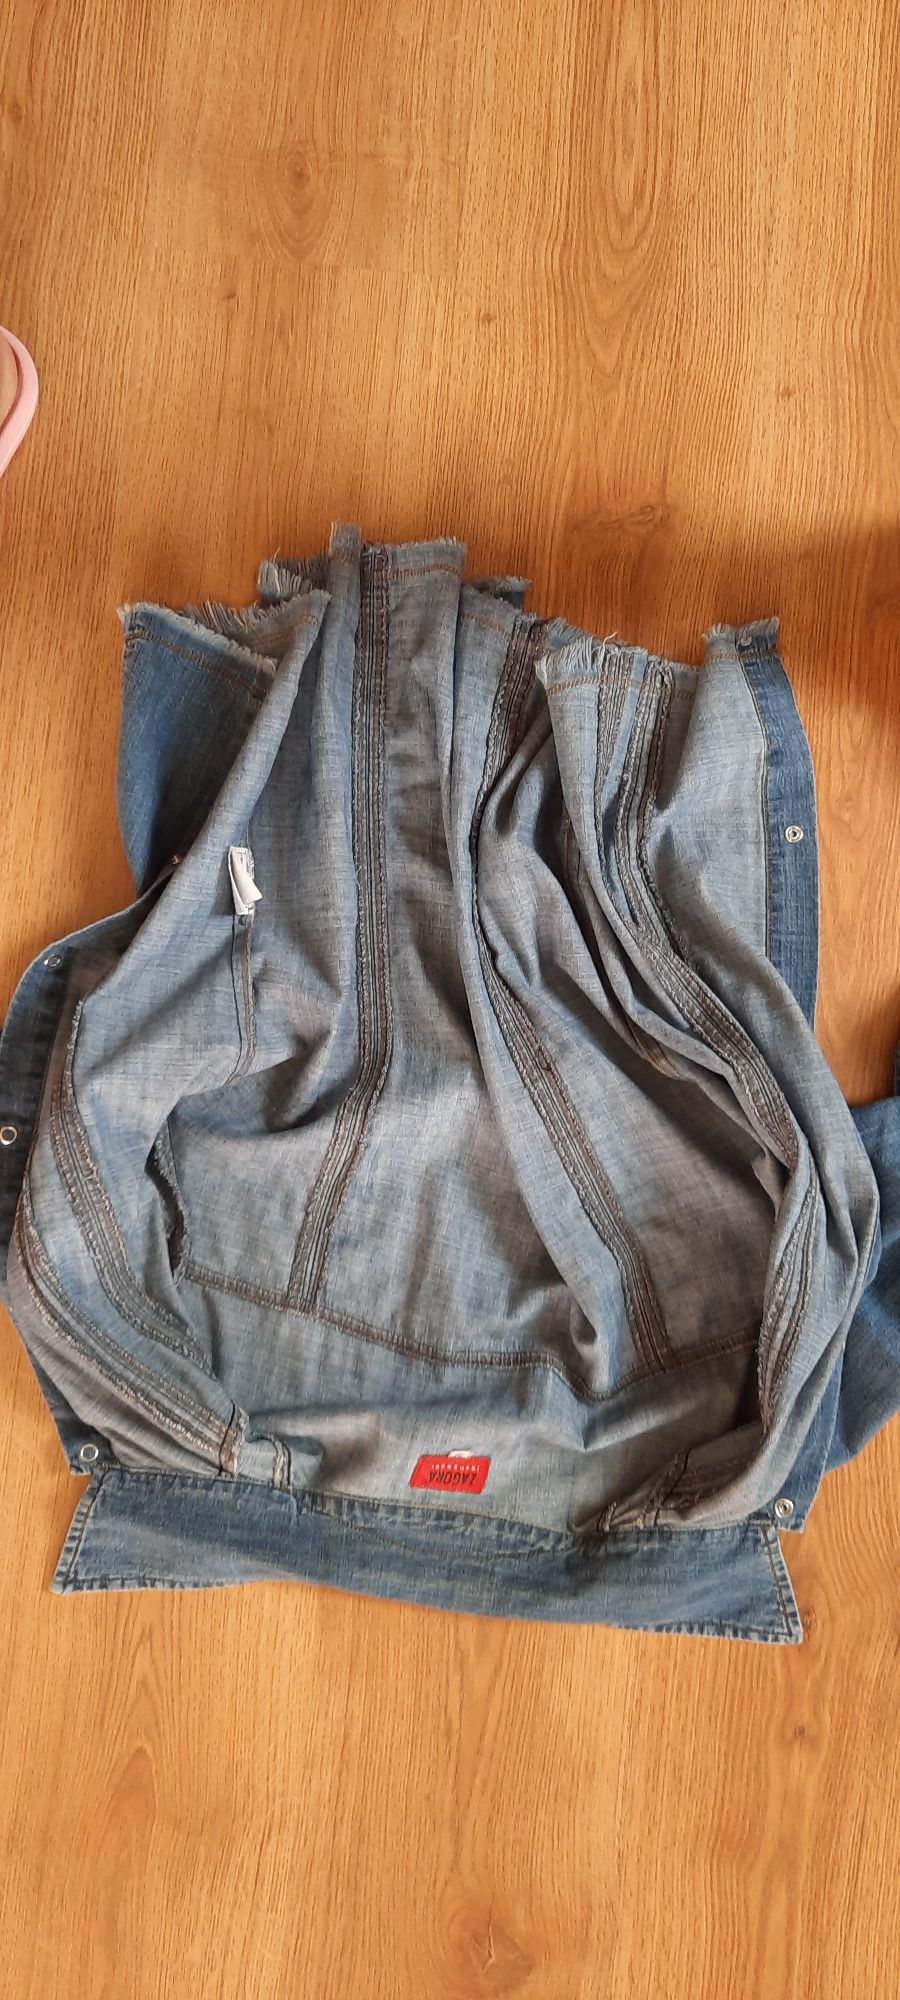 Koszula/katana jeans